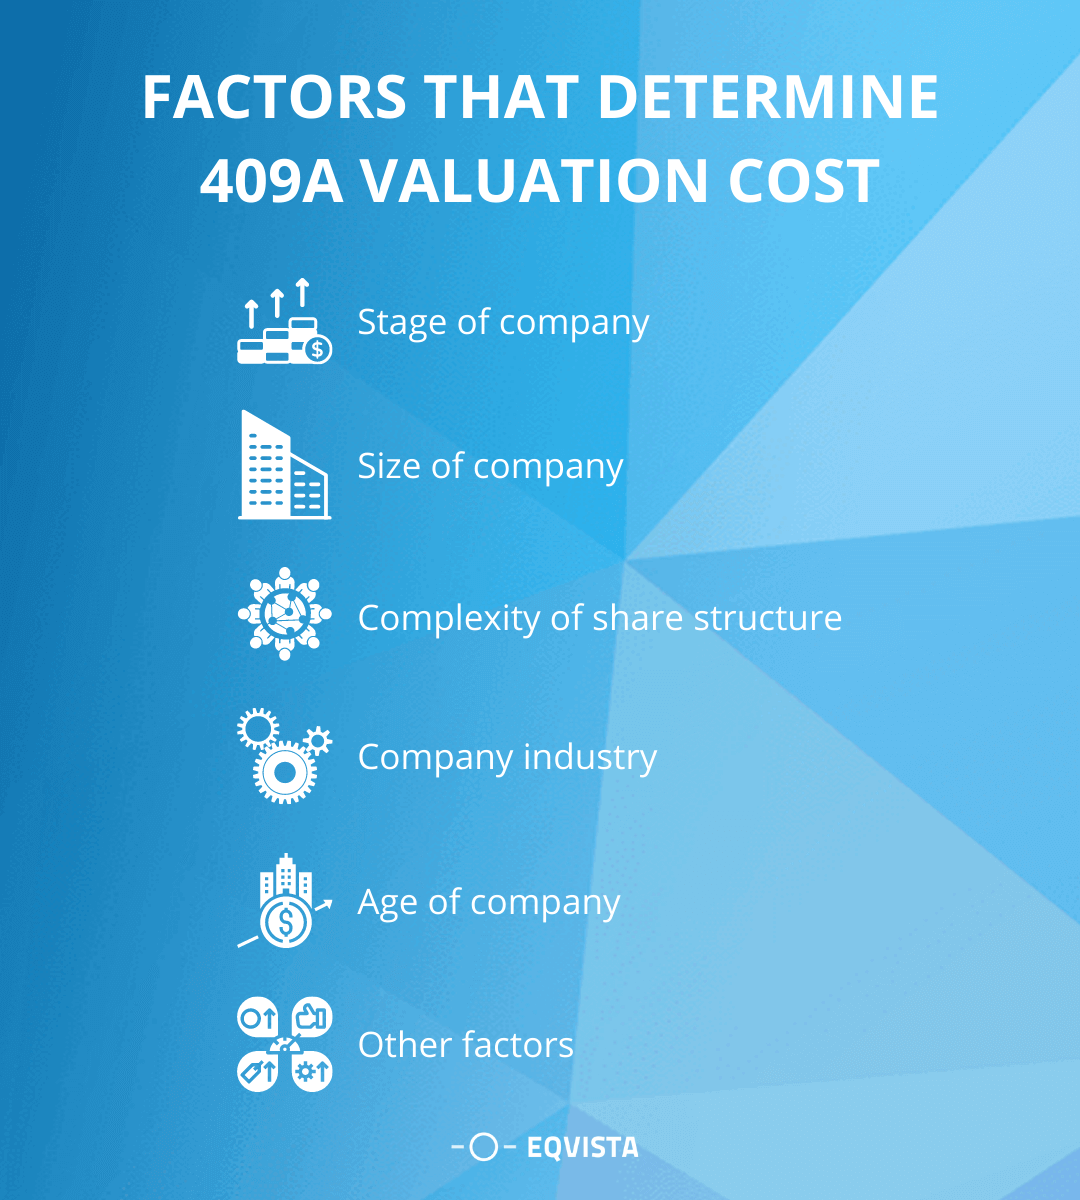 Factors that determine 409a valuation cost